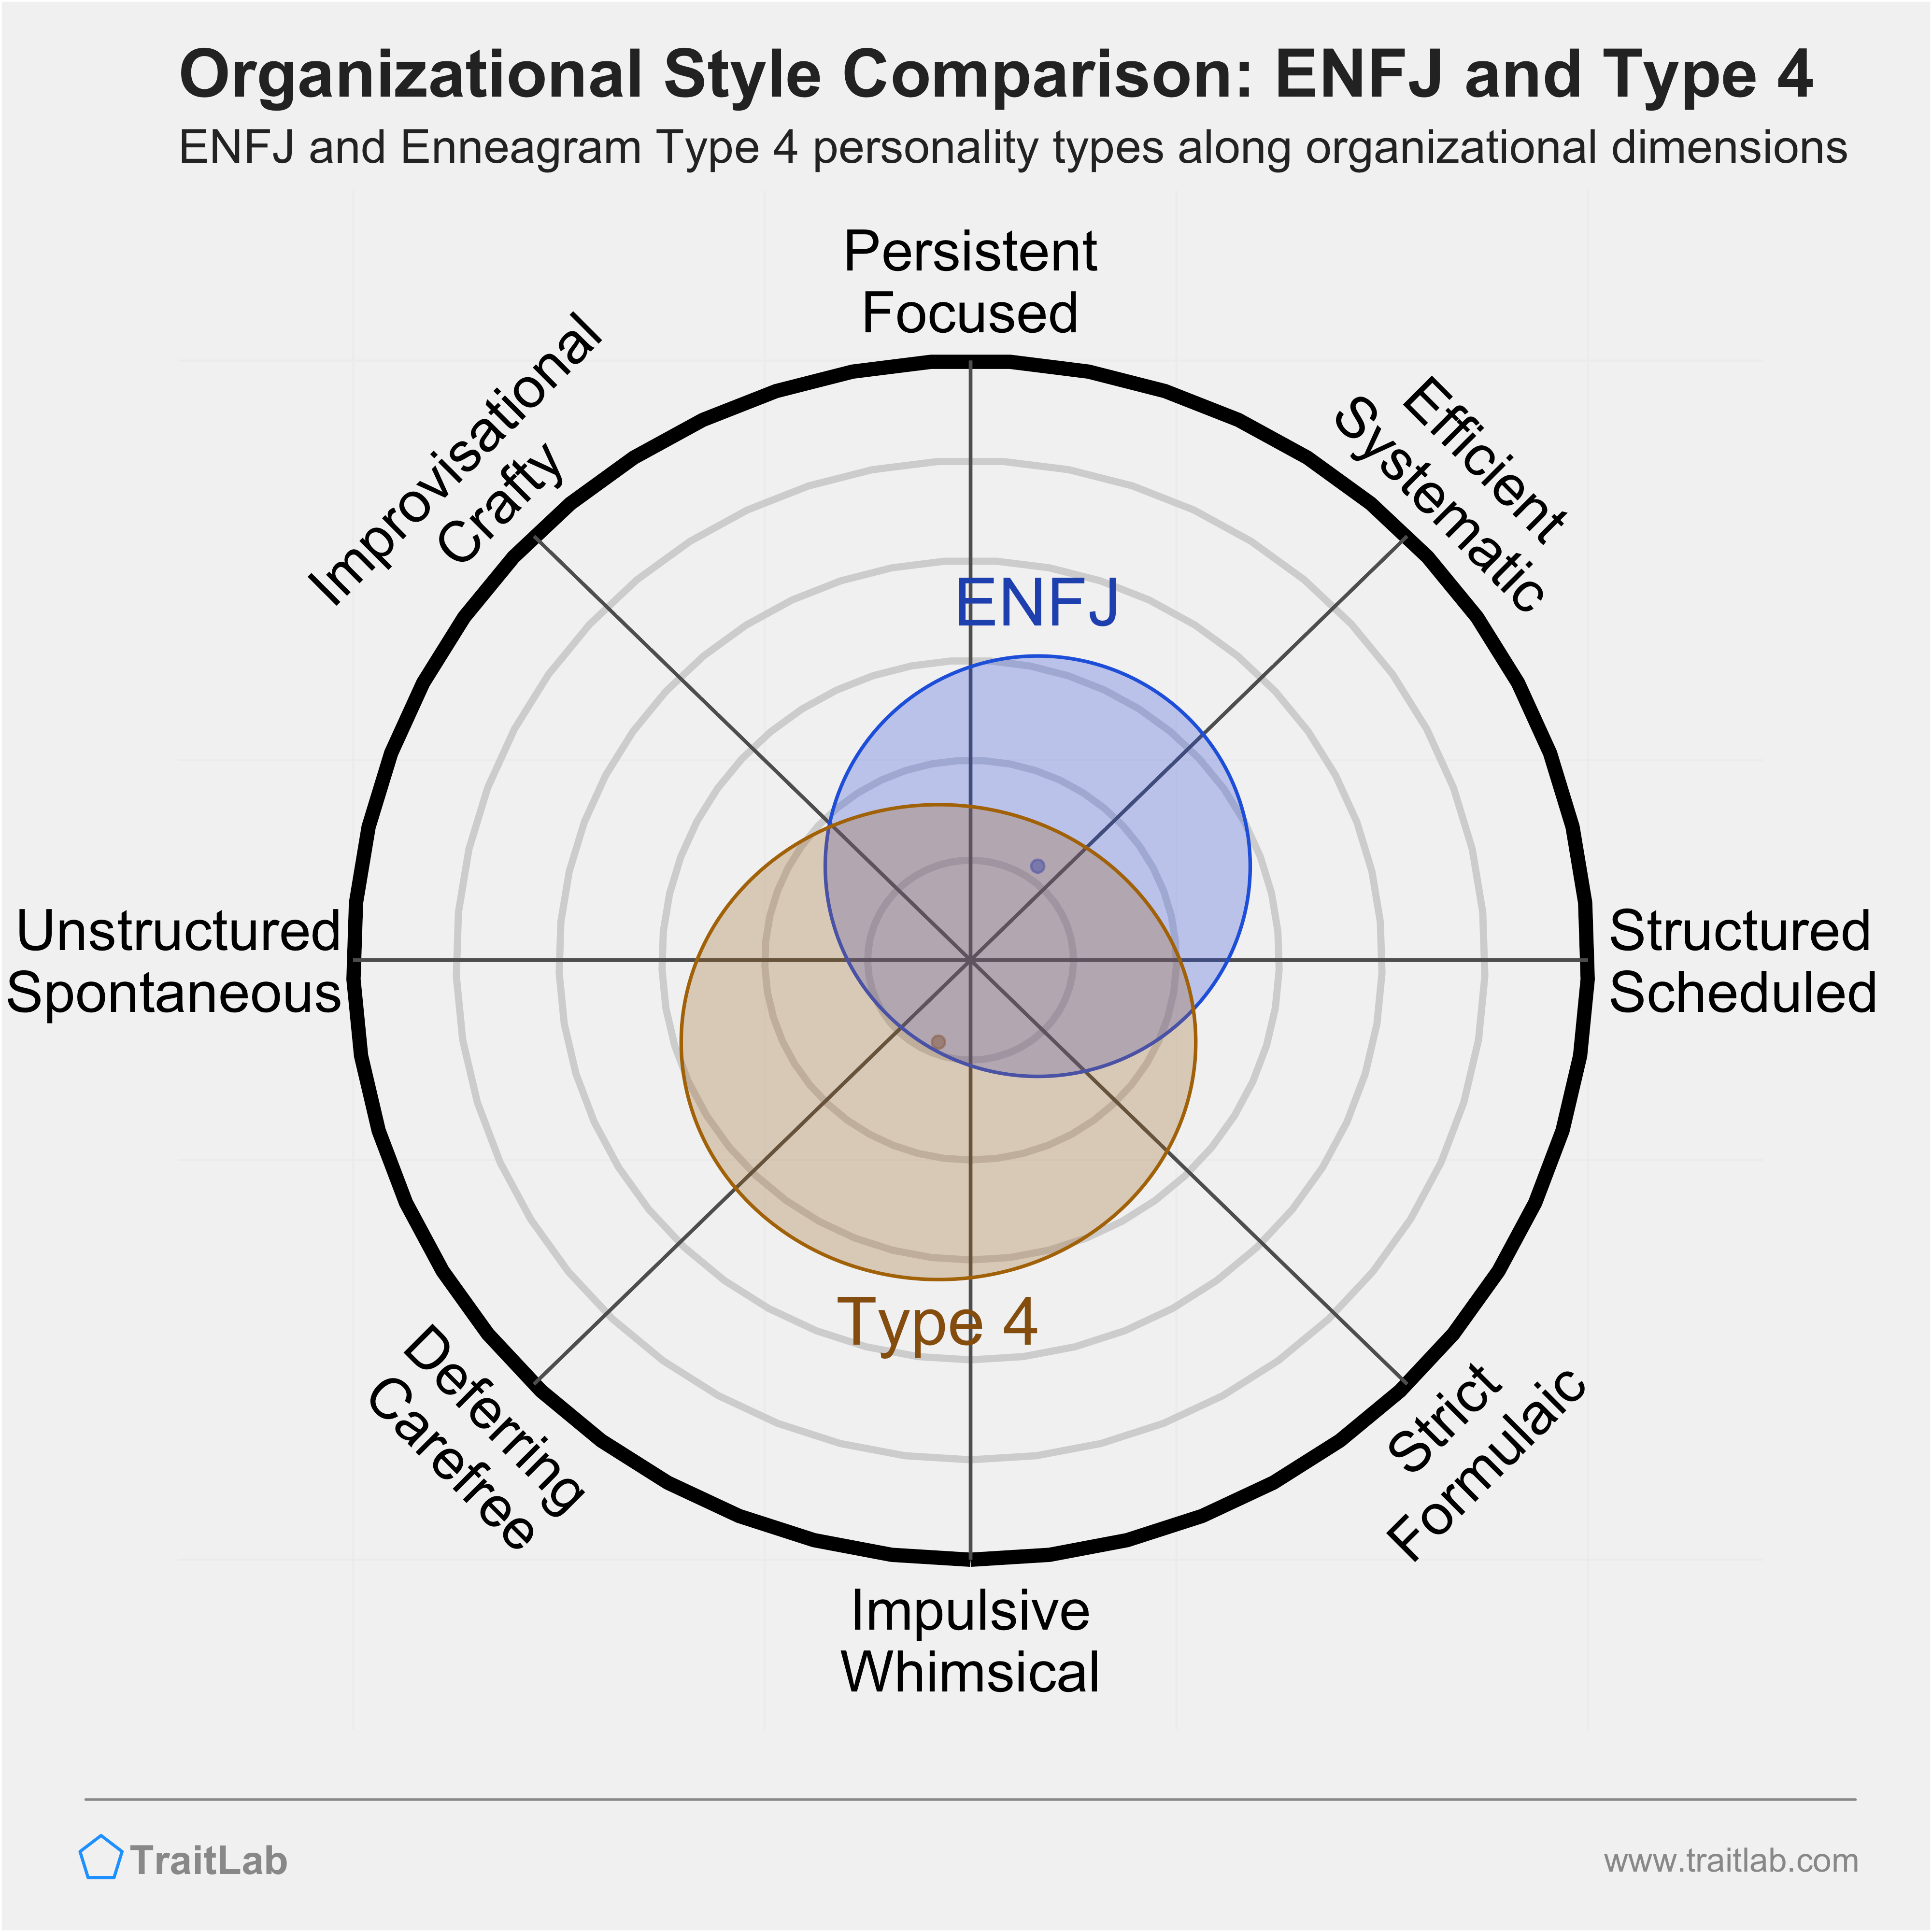 ENFJ and Type 4 comparison across organizational dimensions